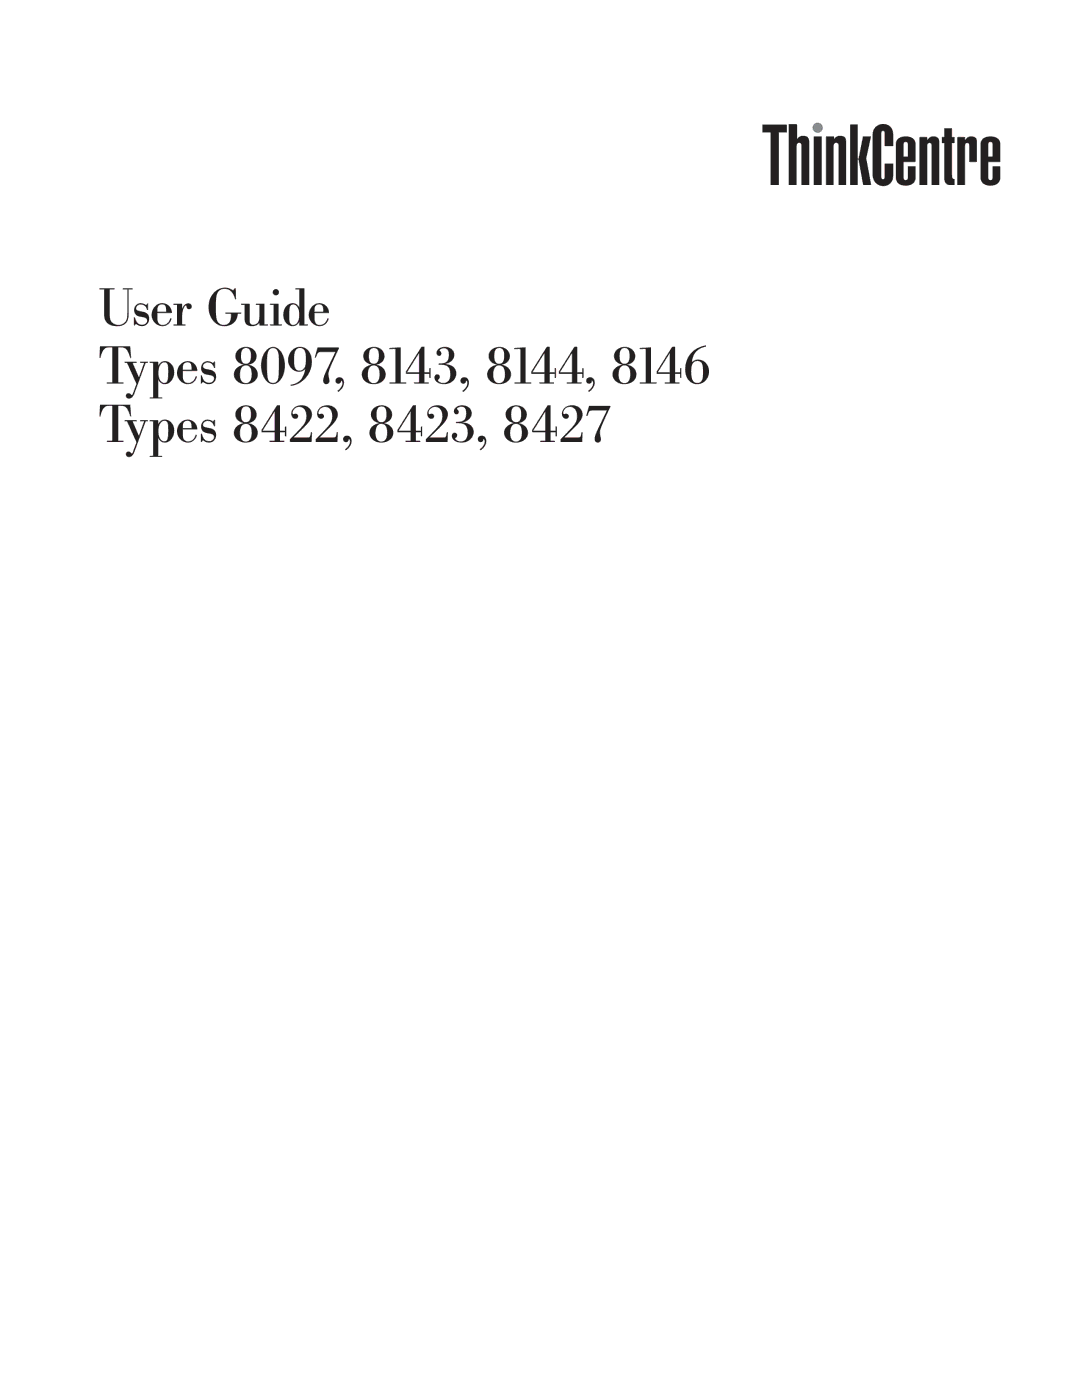 Lenovo 8146, 8427 manual User Guide Types 8097, 8143, 8144 Types 8422, 8423 